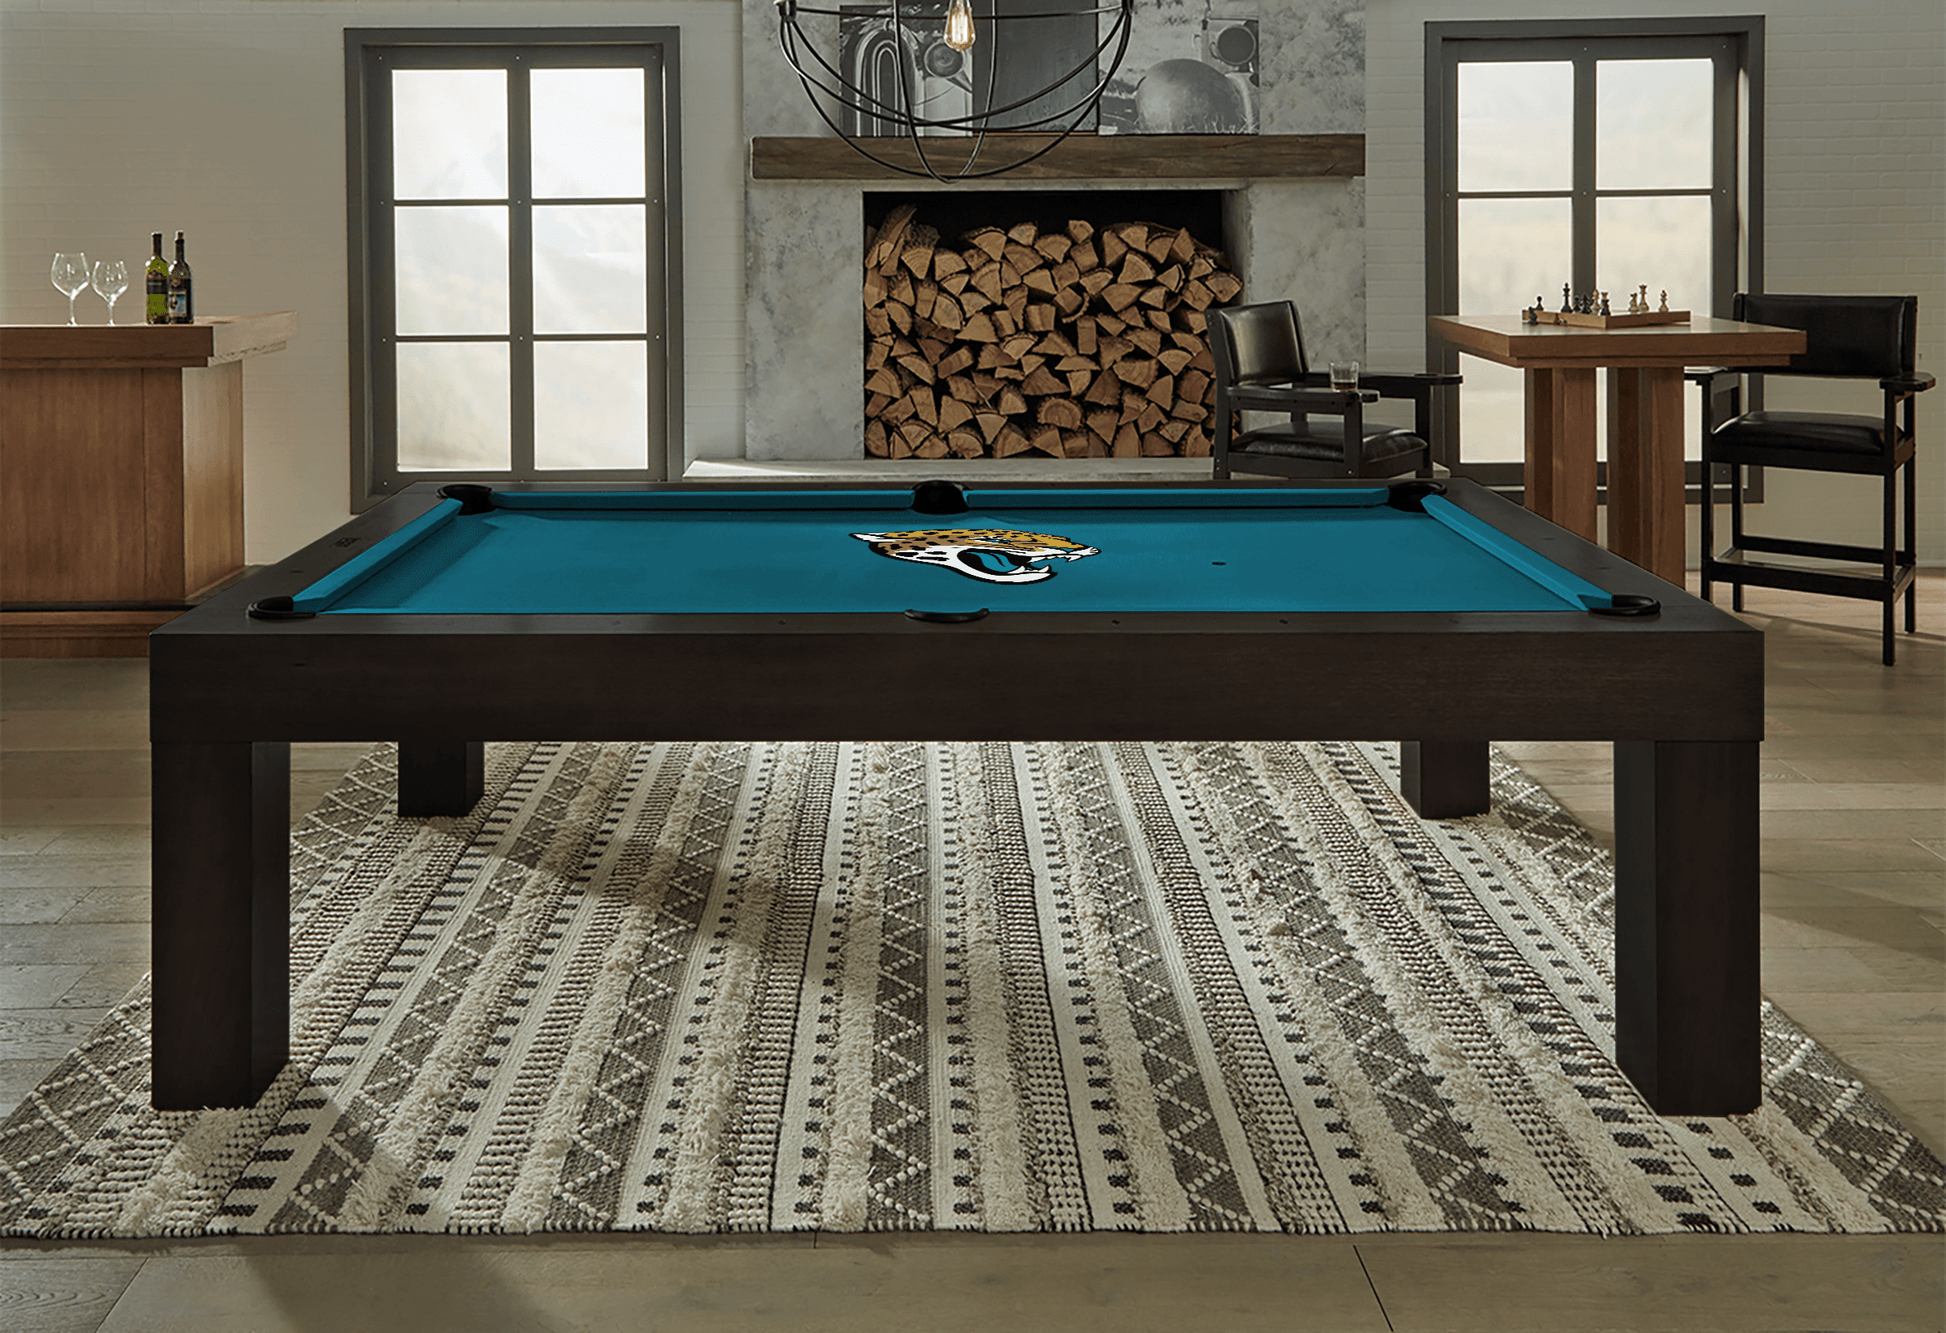 Jacksonville Jaguars Premium Pool Table Bundle - Black Ash Pool Bundle Home Arcade Games   